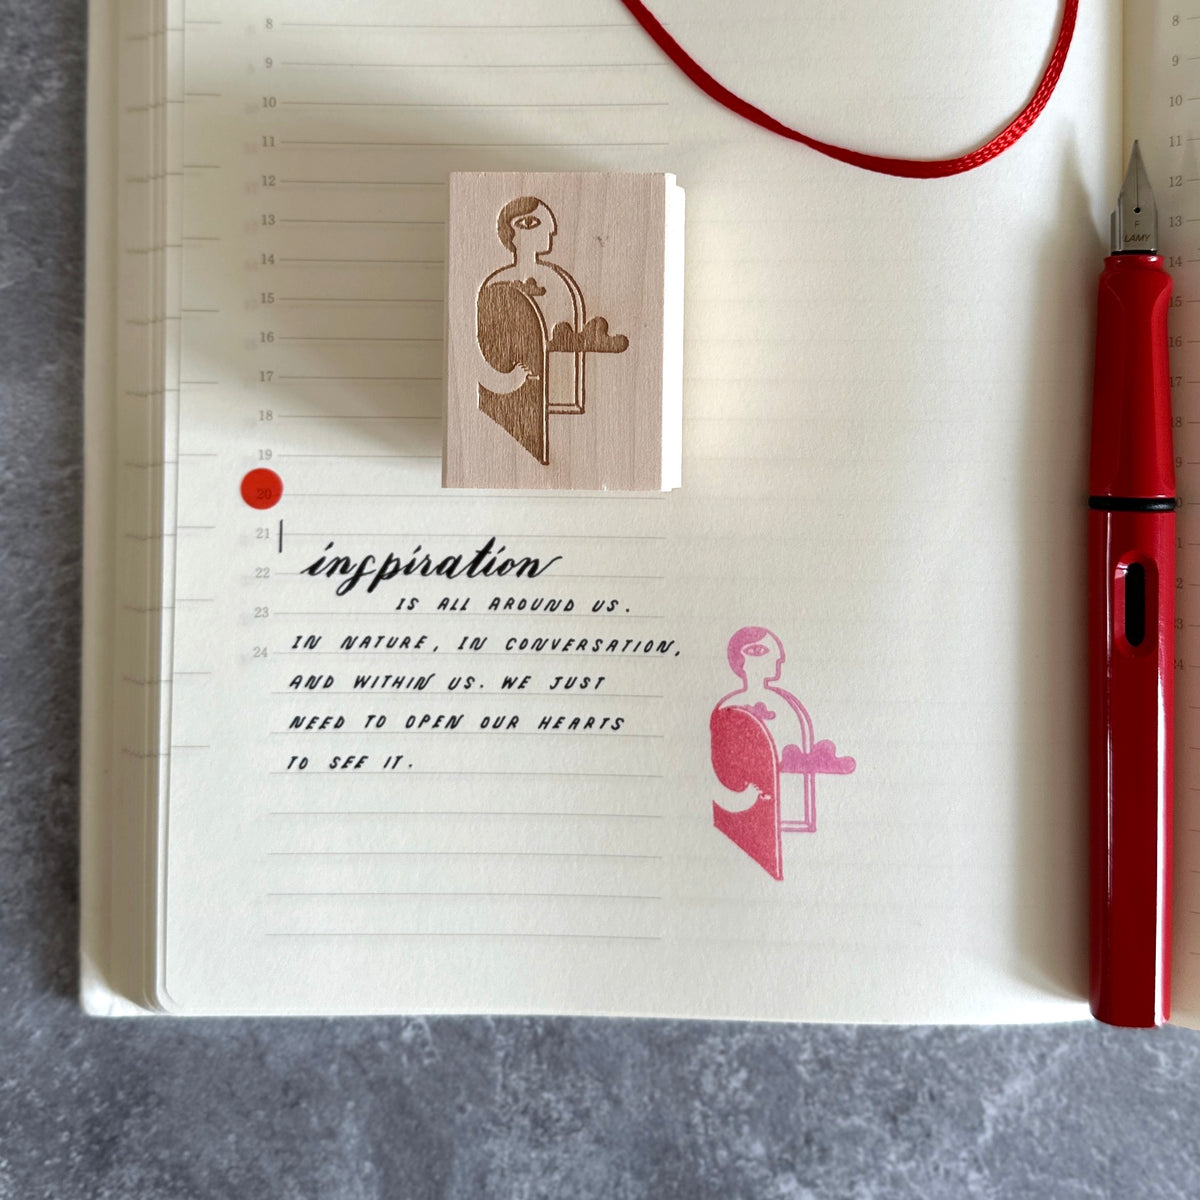 [Stamp] Inspiration by Joni Marriott